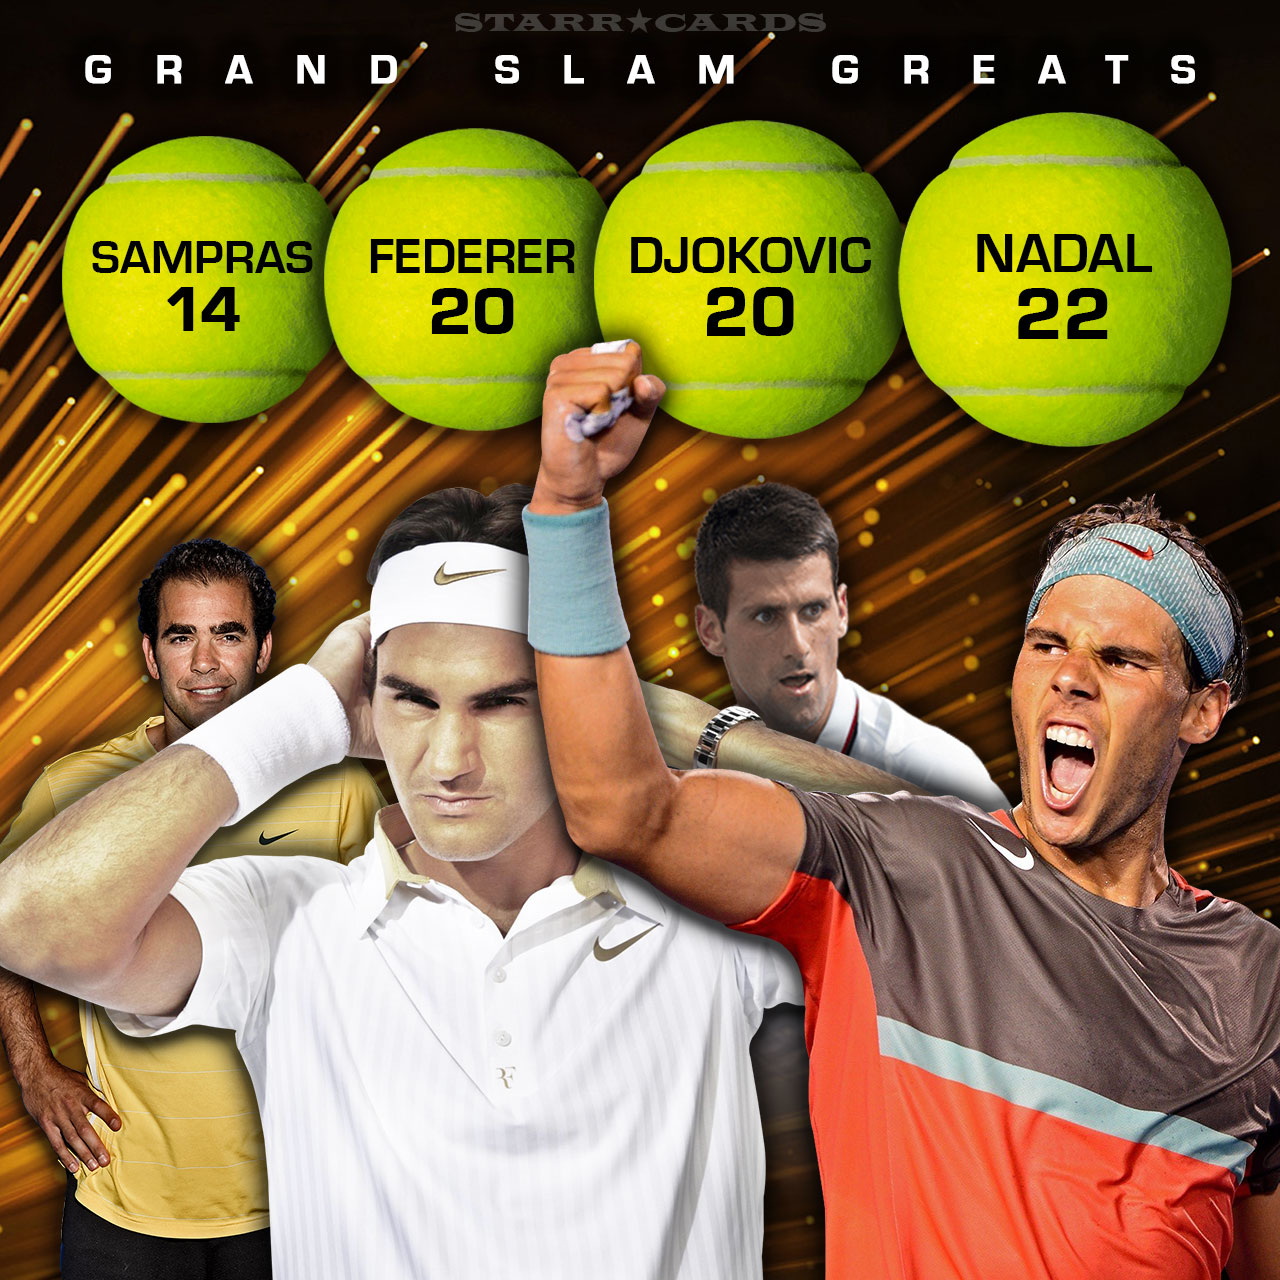 Tennis' Grand Slam Greats: Roger Federer, Rafael Nadal, Pete Sampras, Novak Djokovic